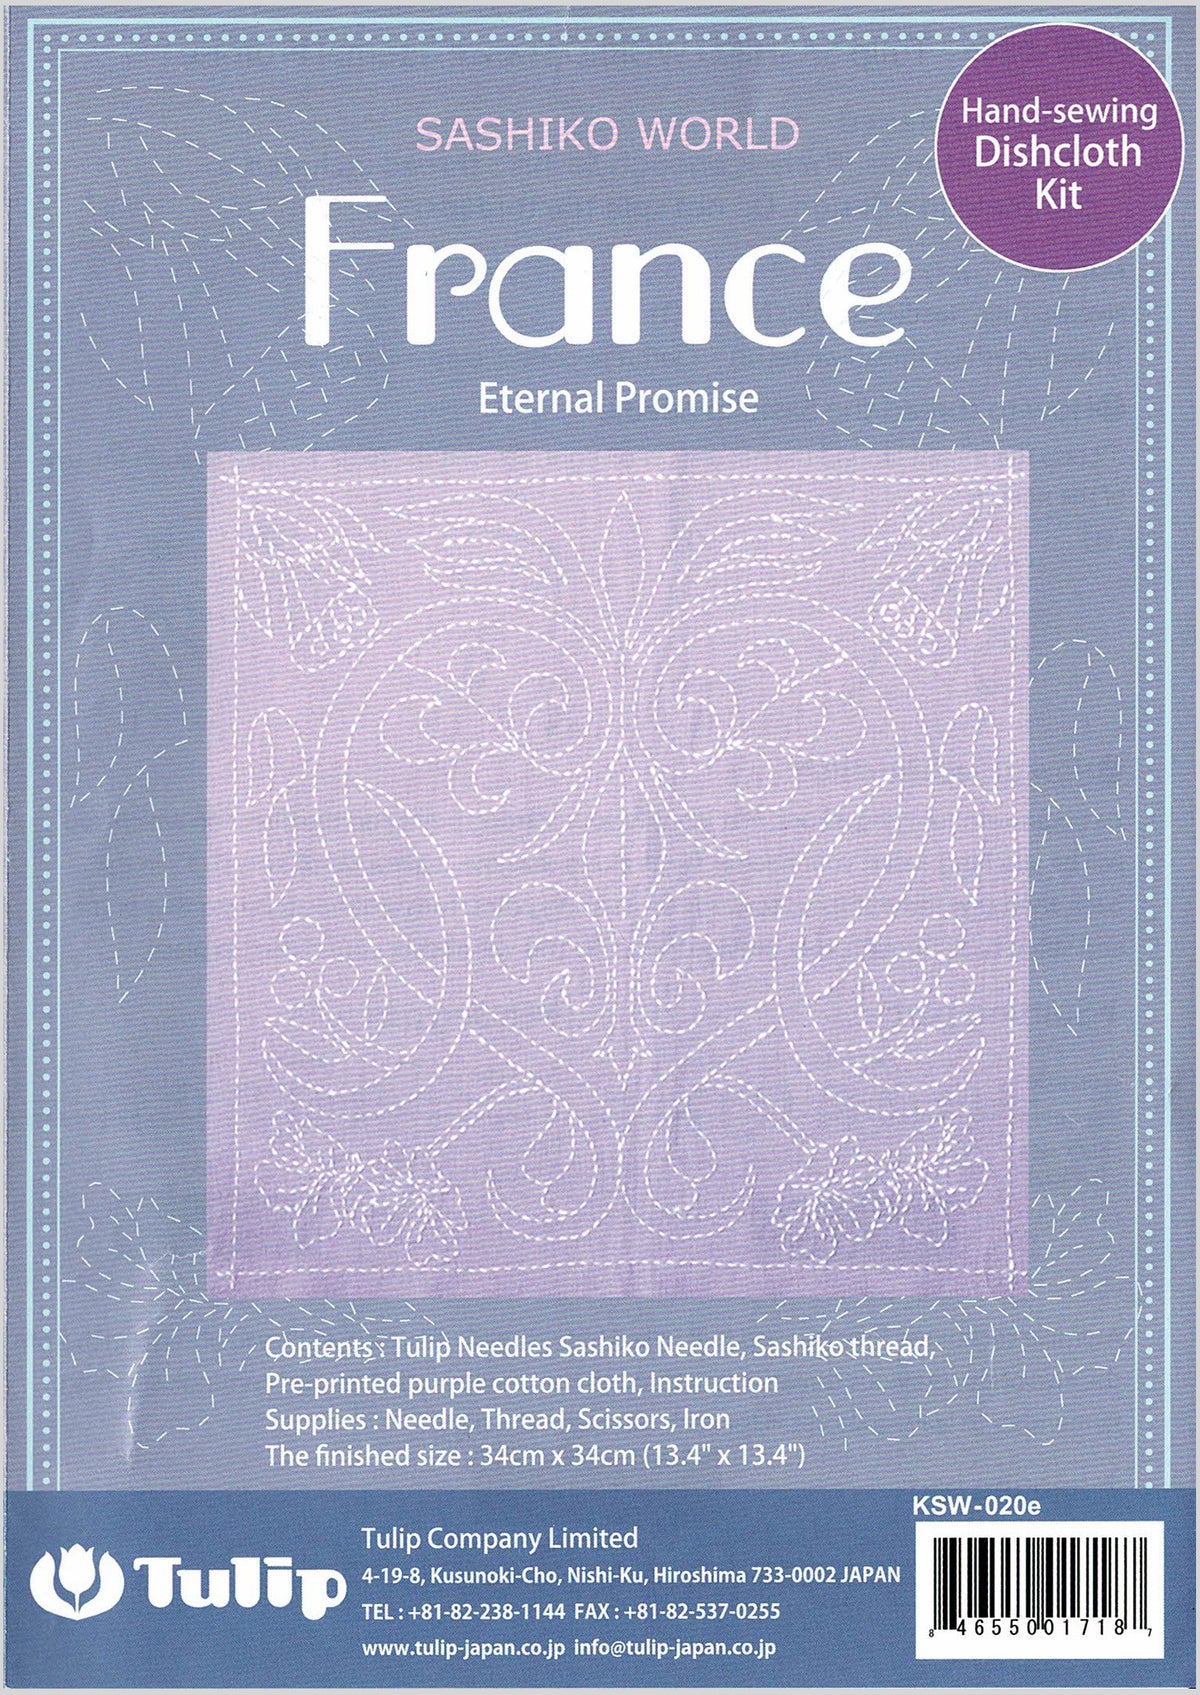 Sashiko World Embroidery Kit - France Eternal Promise